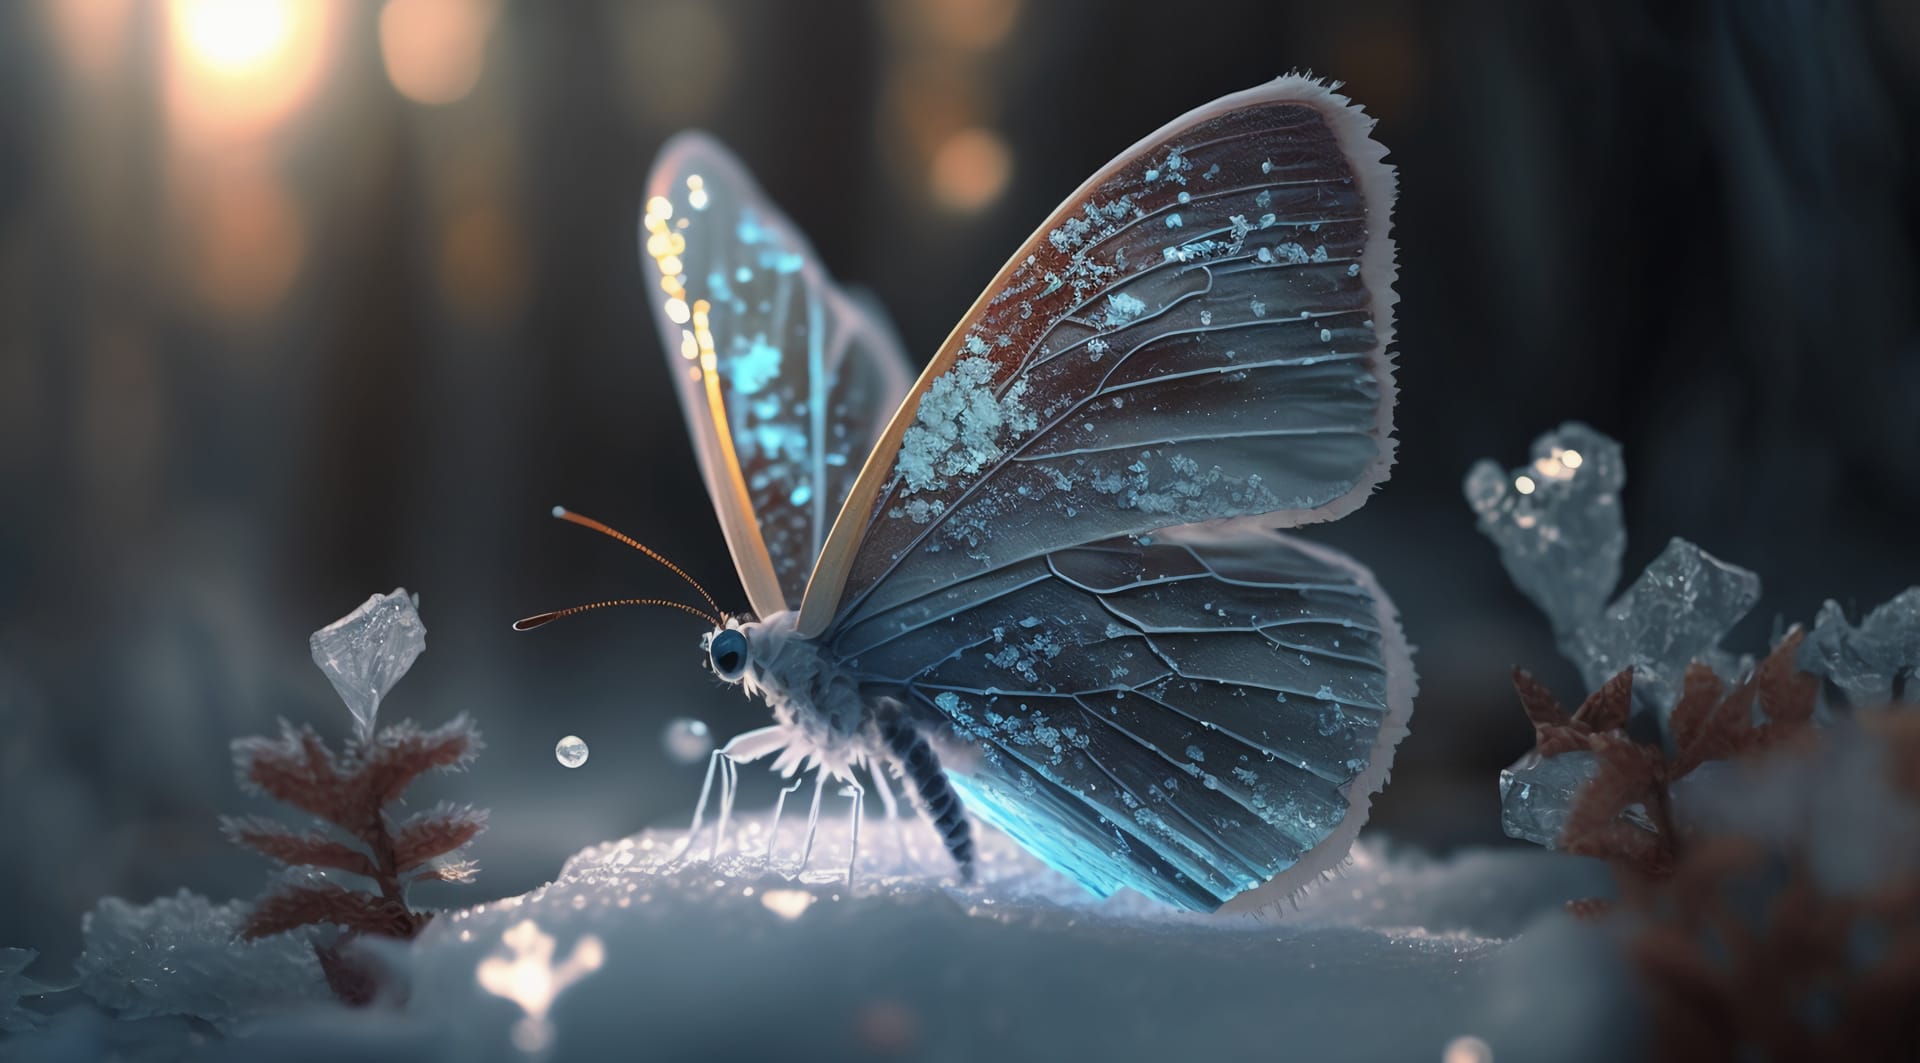 Butterfly image ice snowa light blue ice butterfly falls